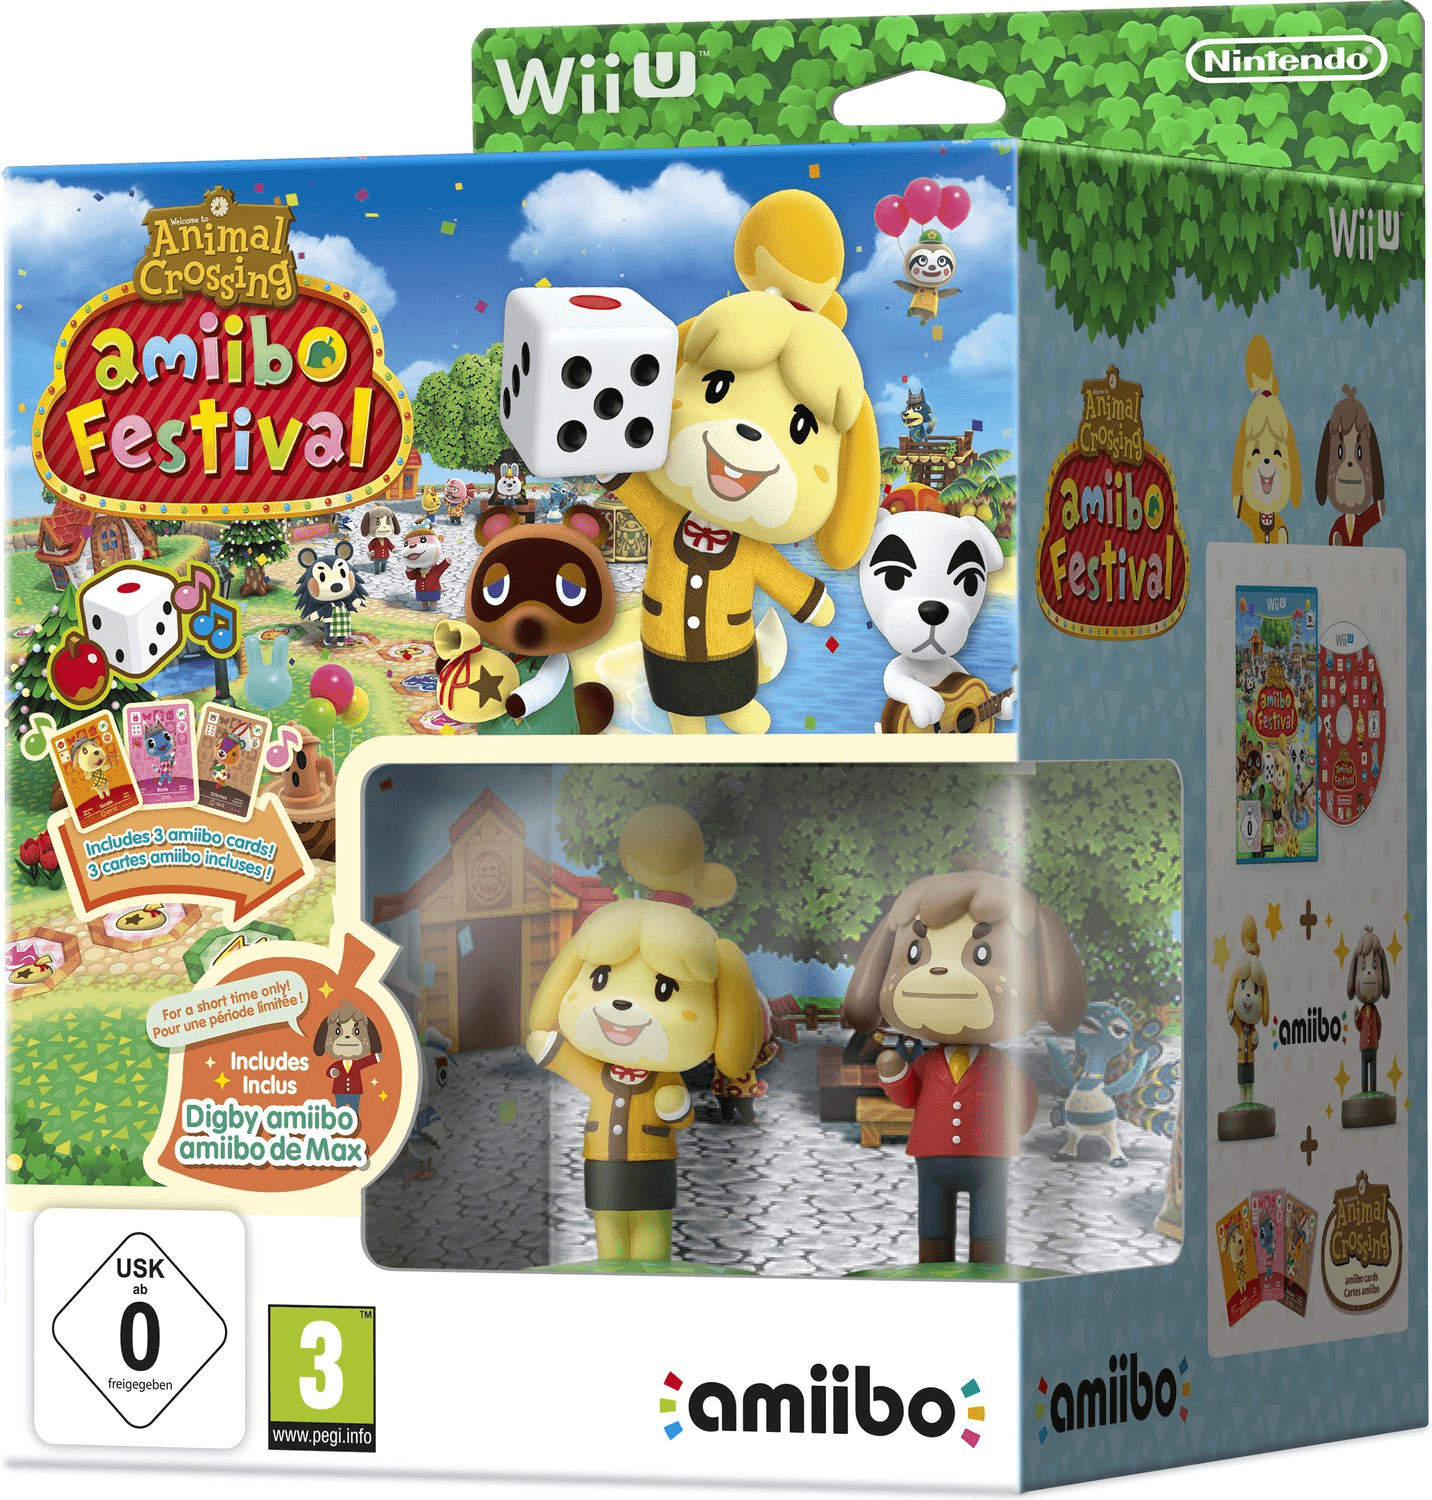 Animal Crossing: amiibo Festival + 2 amiibo figures + 3 amiibo cards (Wii U)